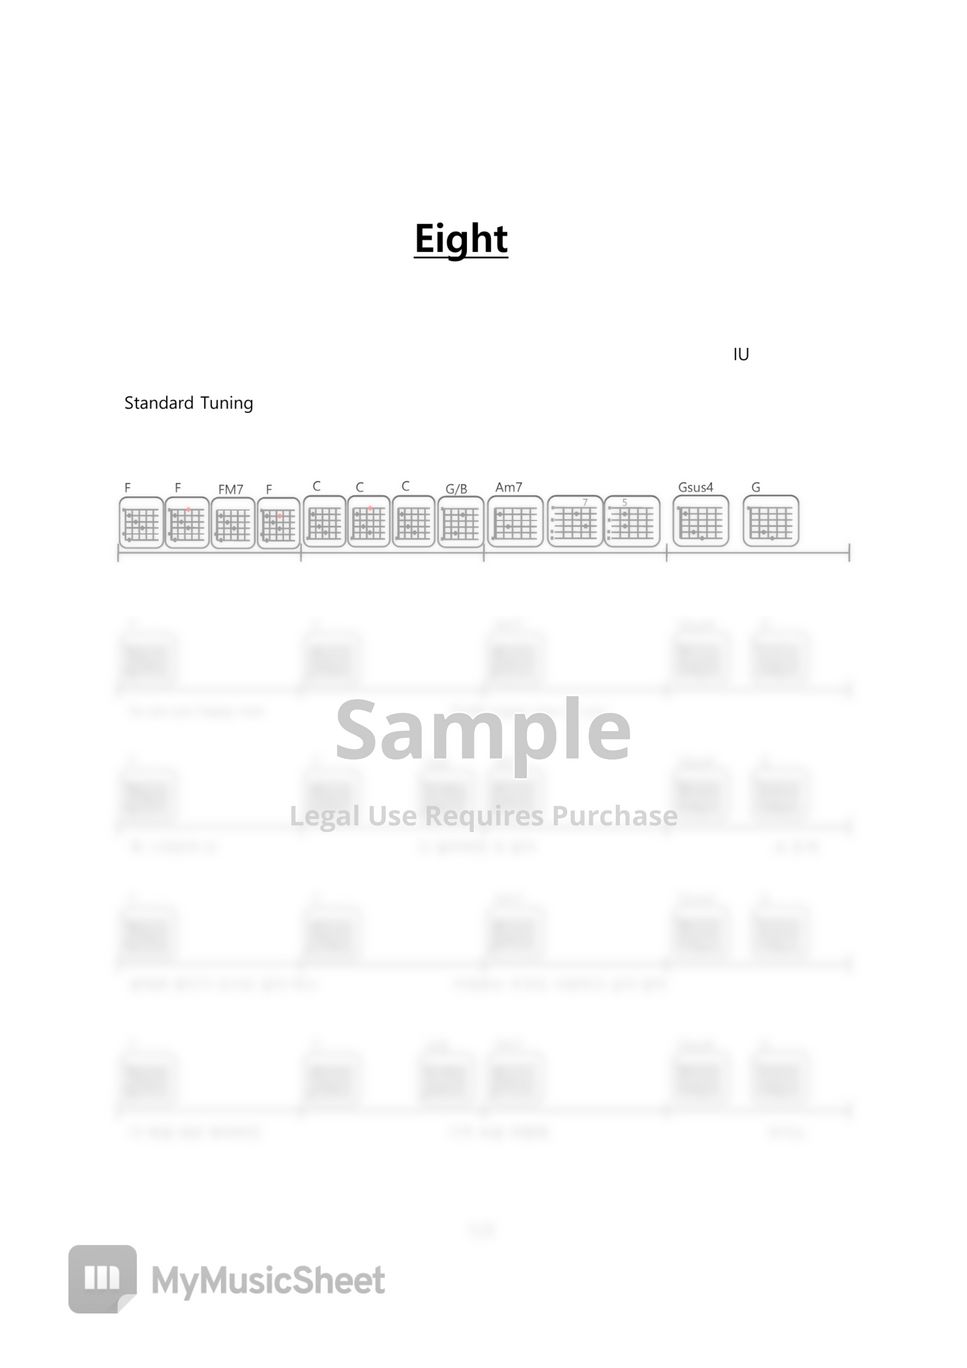 IU - Eight Acoustic version chords sheet